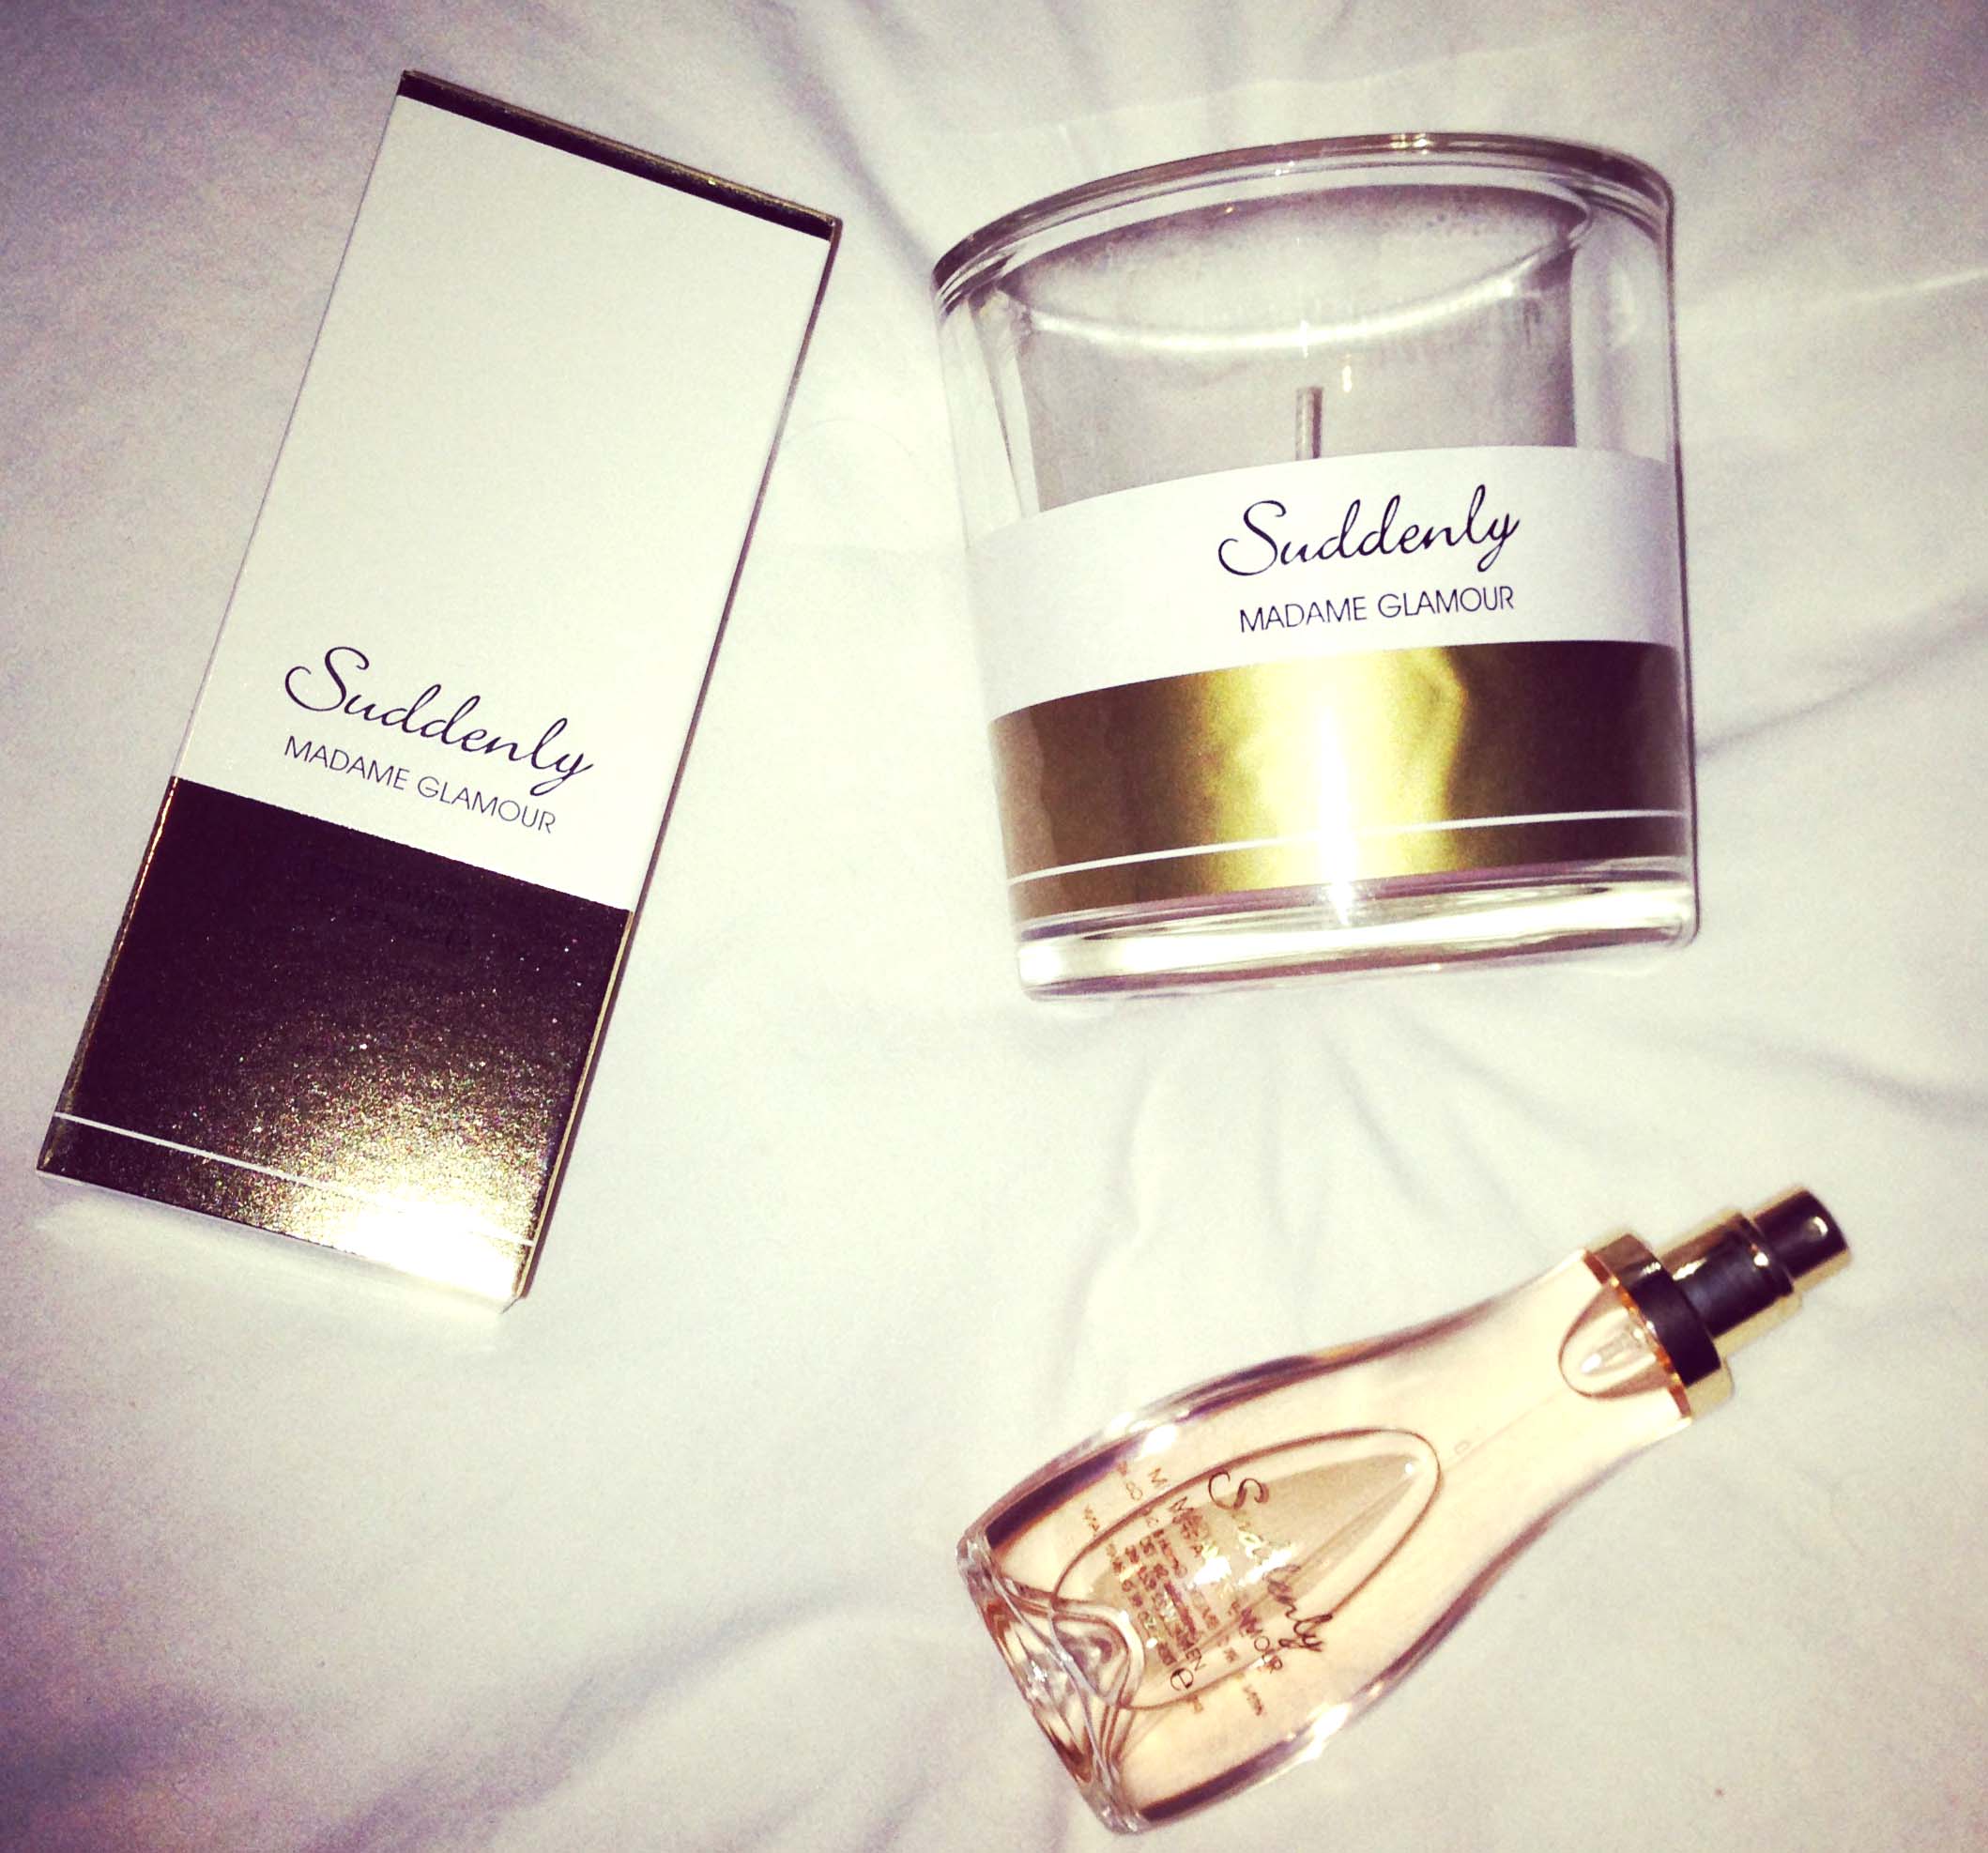 Suddenly madame glamour lidl perfume candle chanel 2 - AJ Makeup